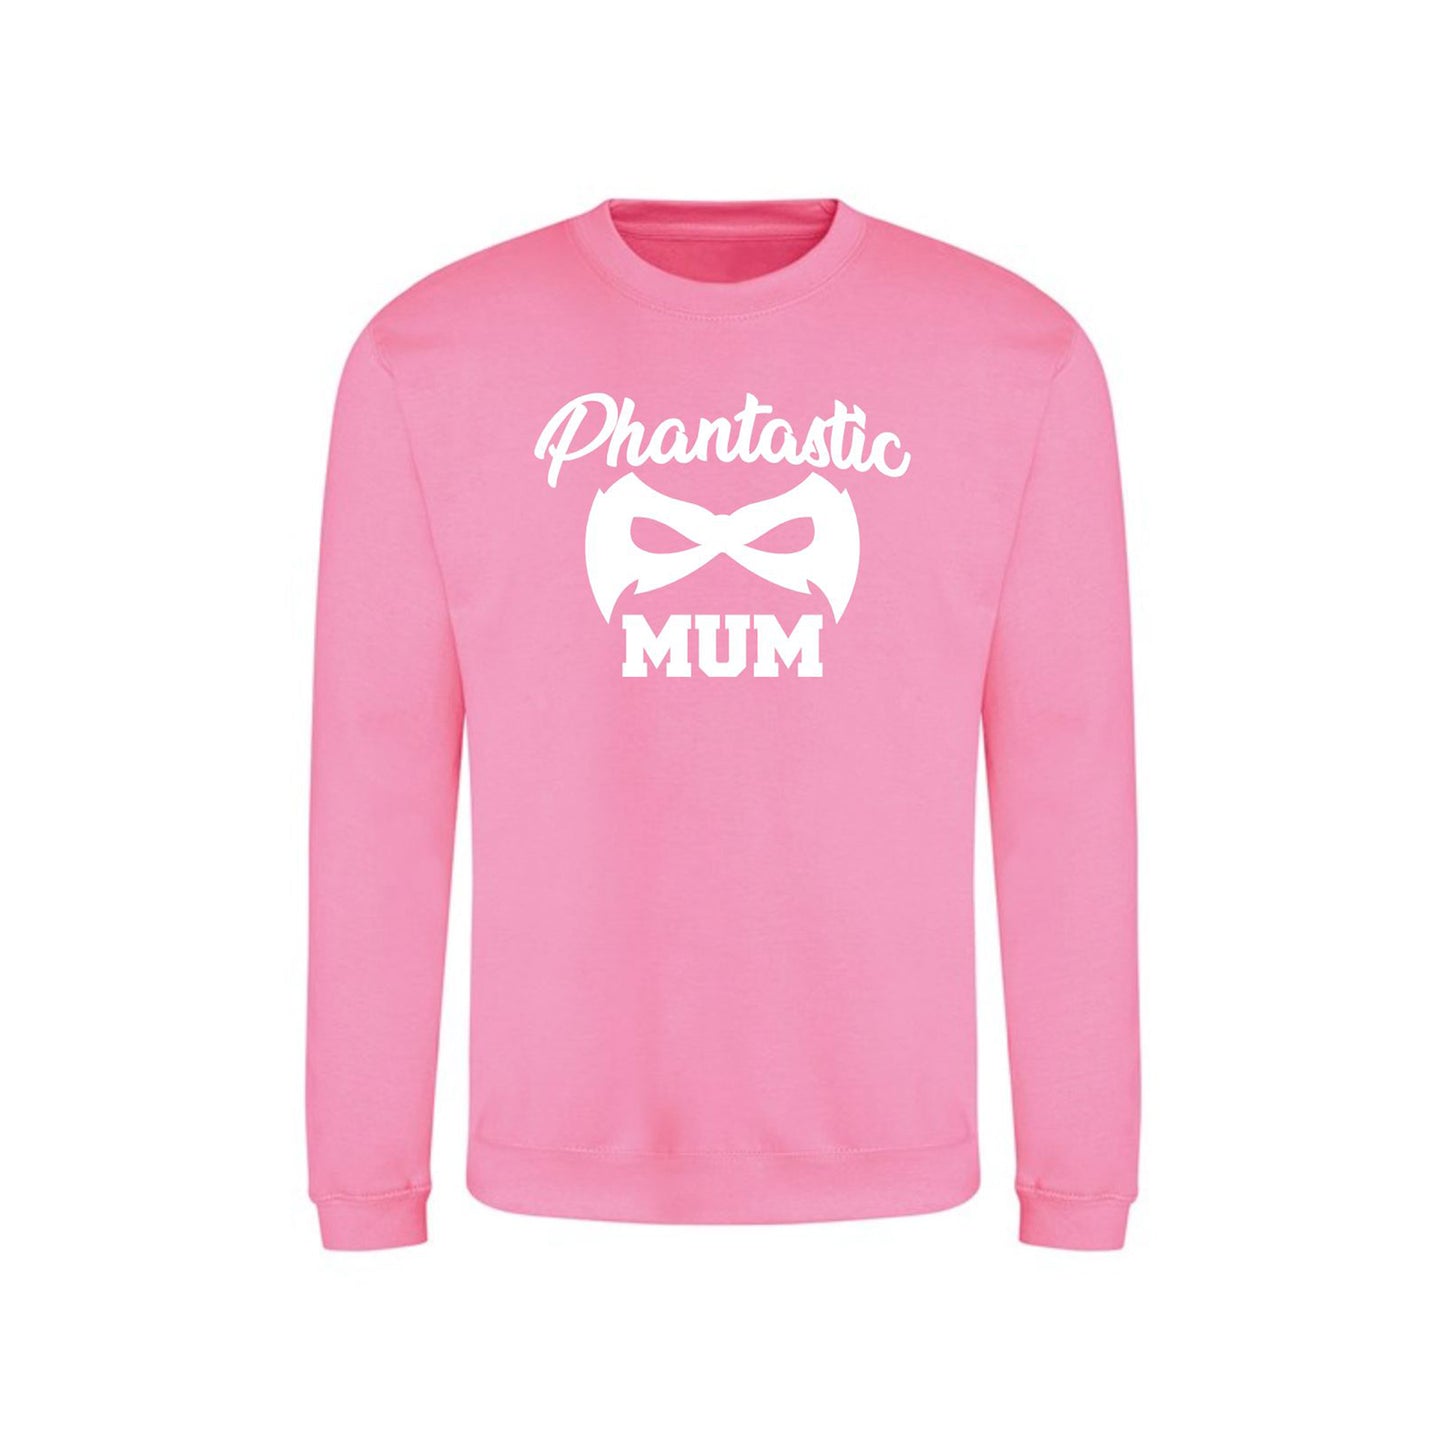 Phantastic Mum Sweatshirt